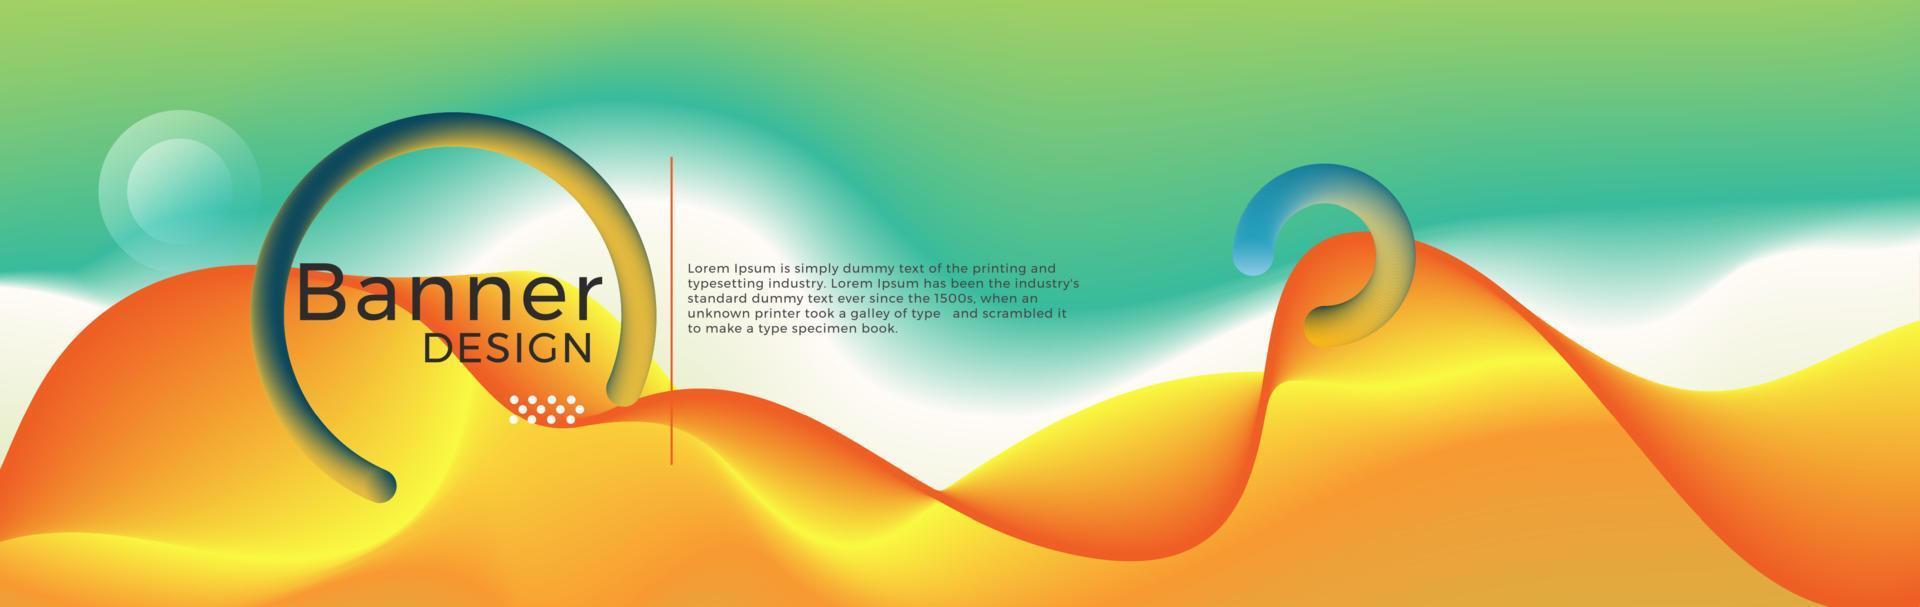 diseño de banner moderno abstracto. degradado colorido con onda líquida. vector